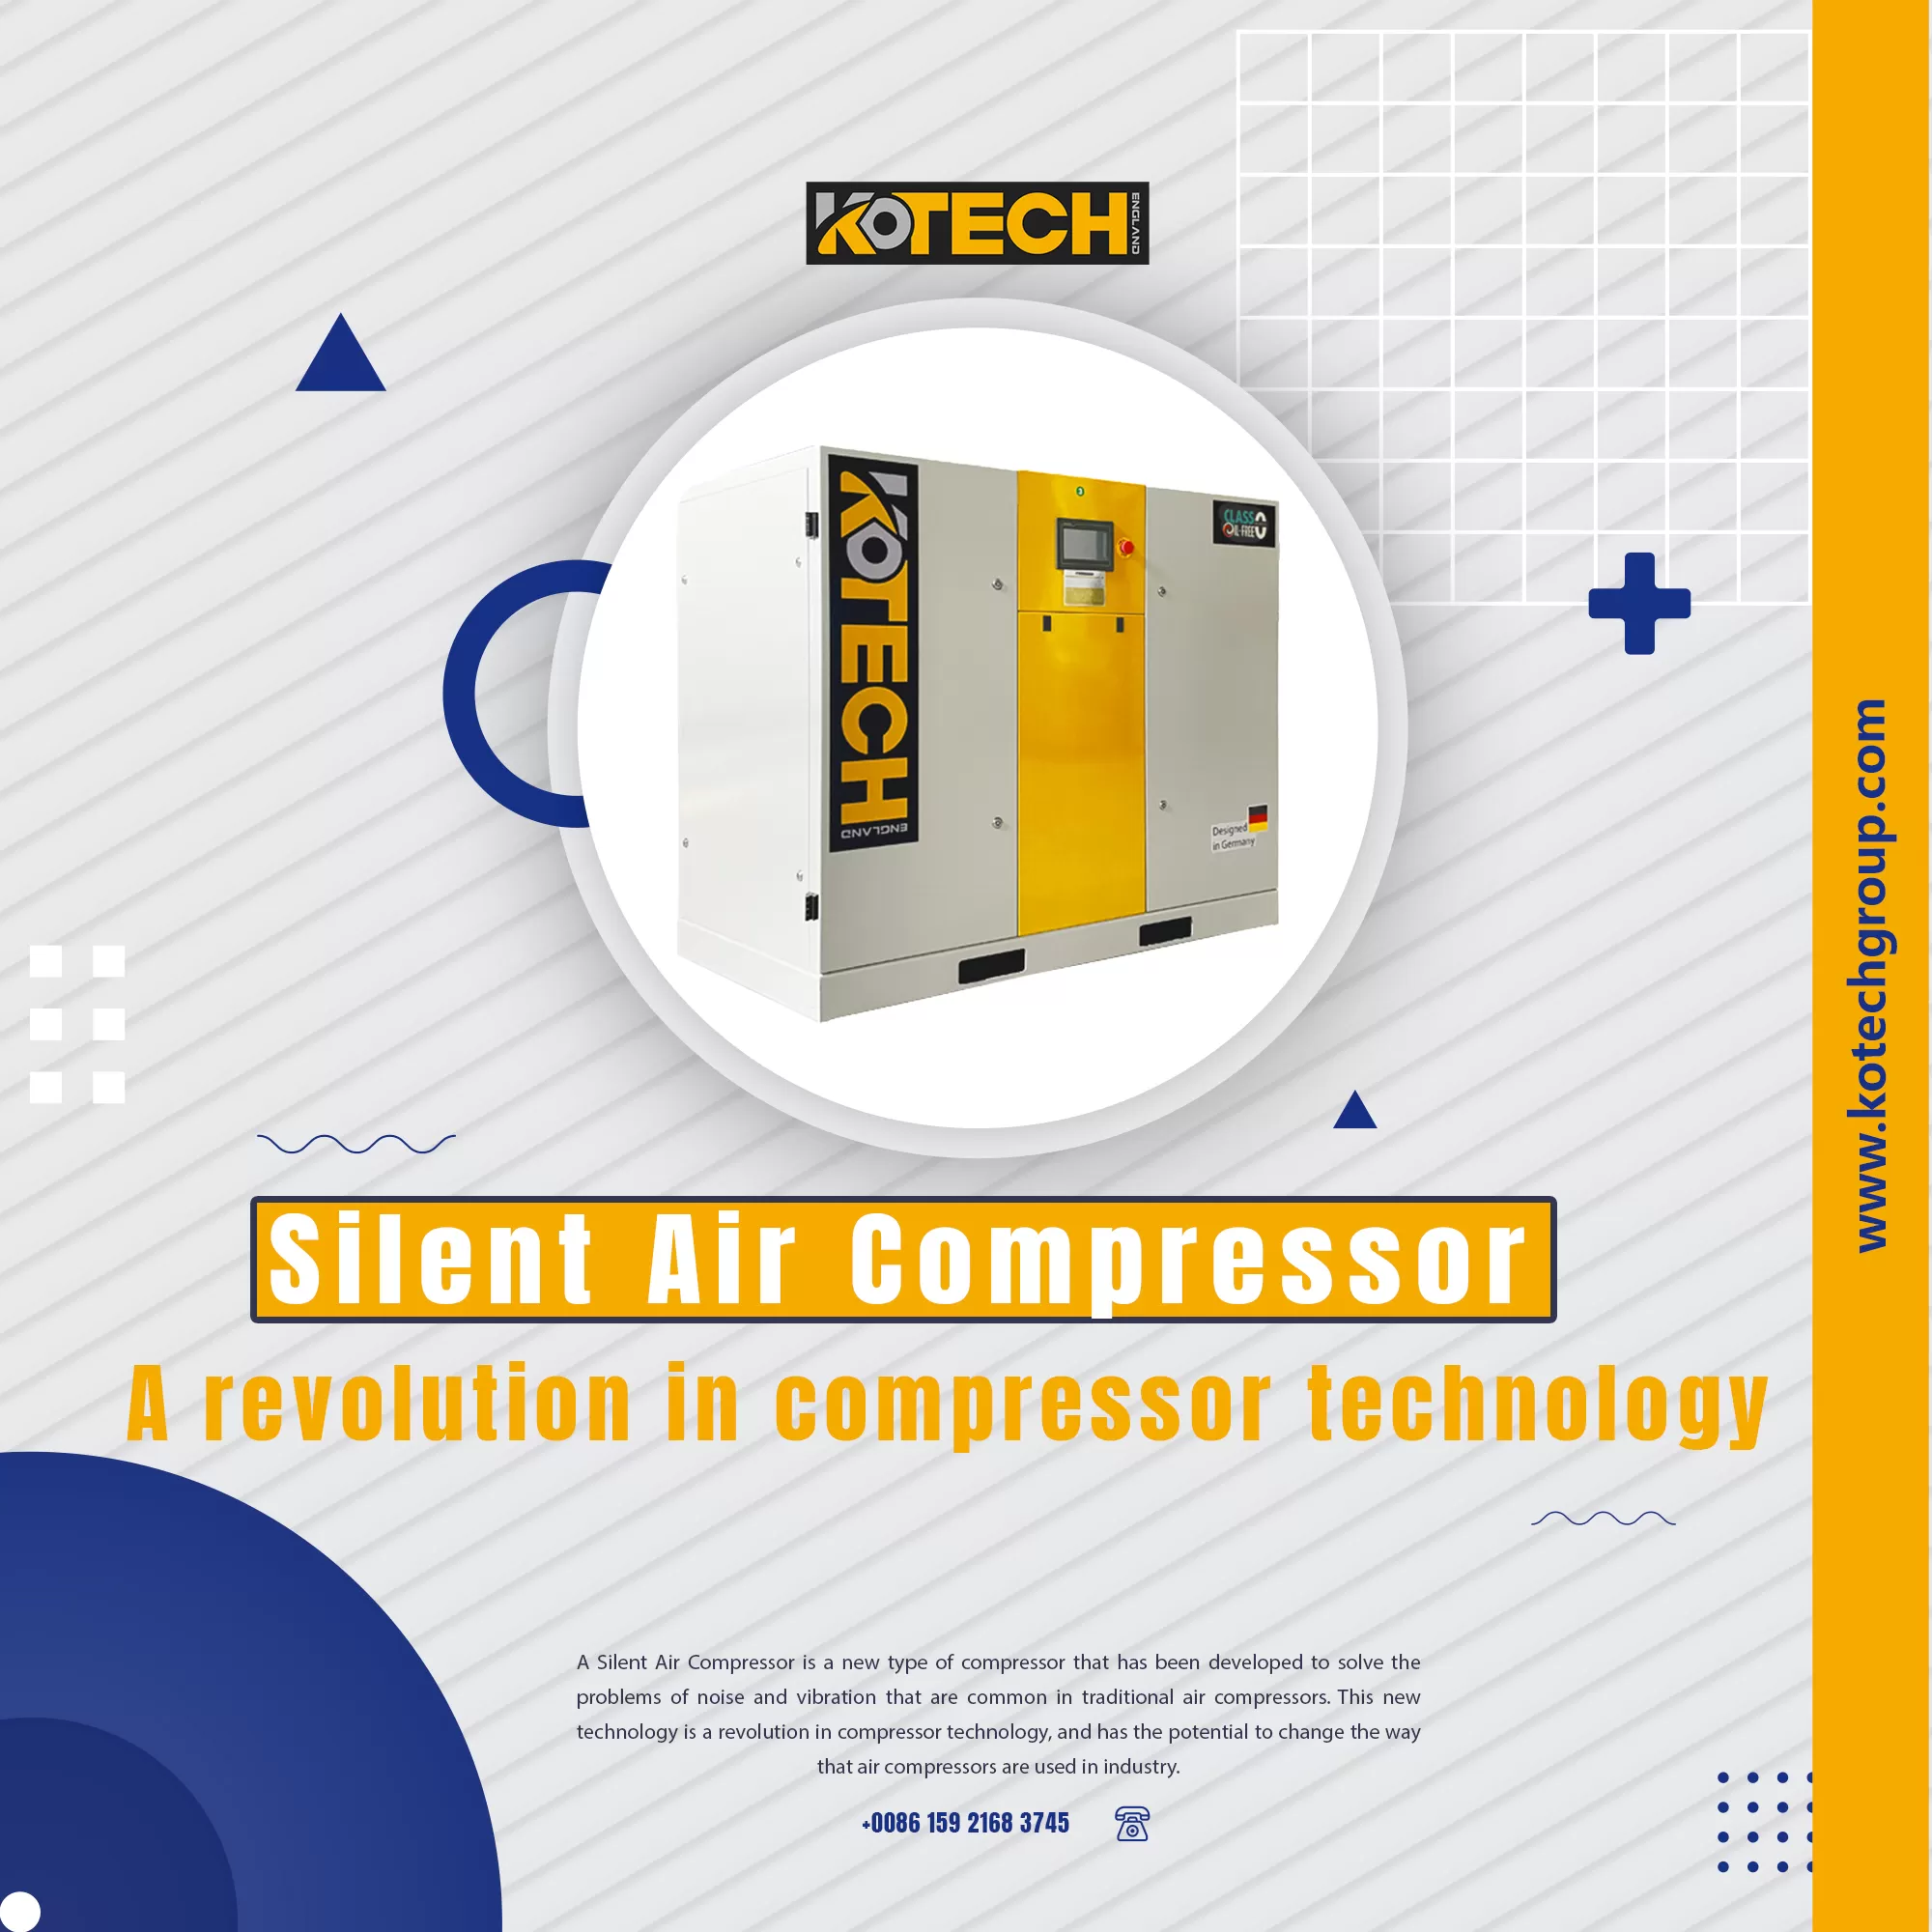 Silent Air Compressor- A revolution in compressor technology